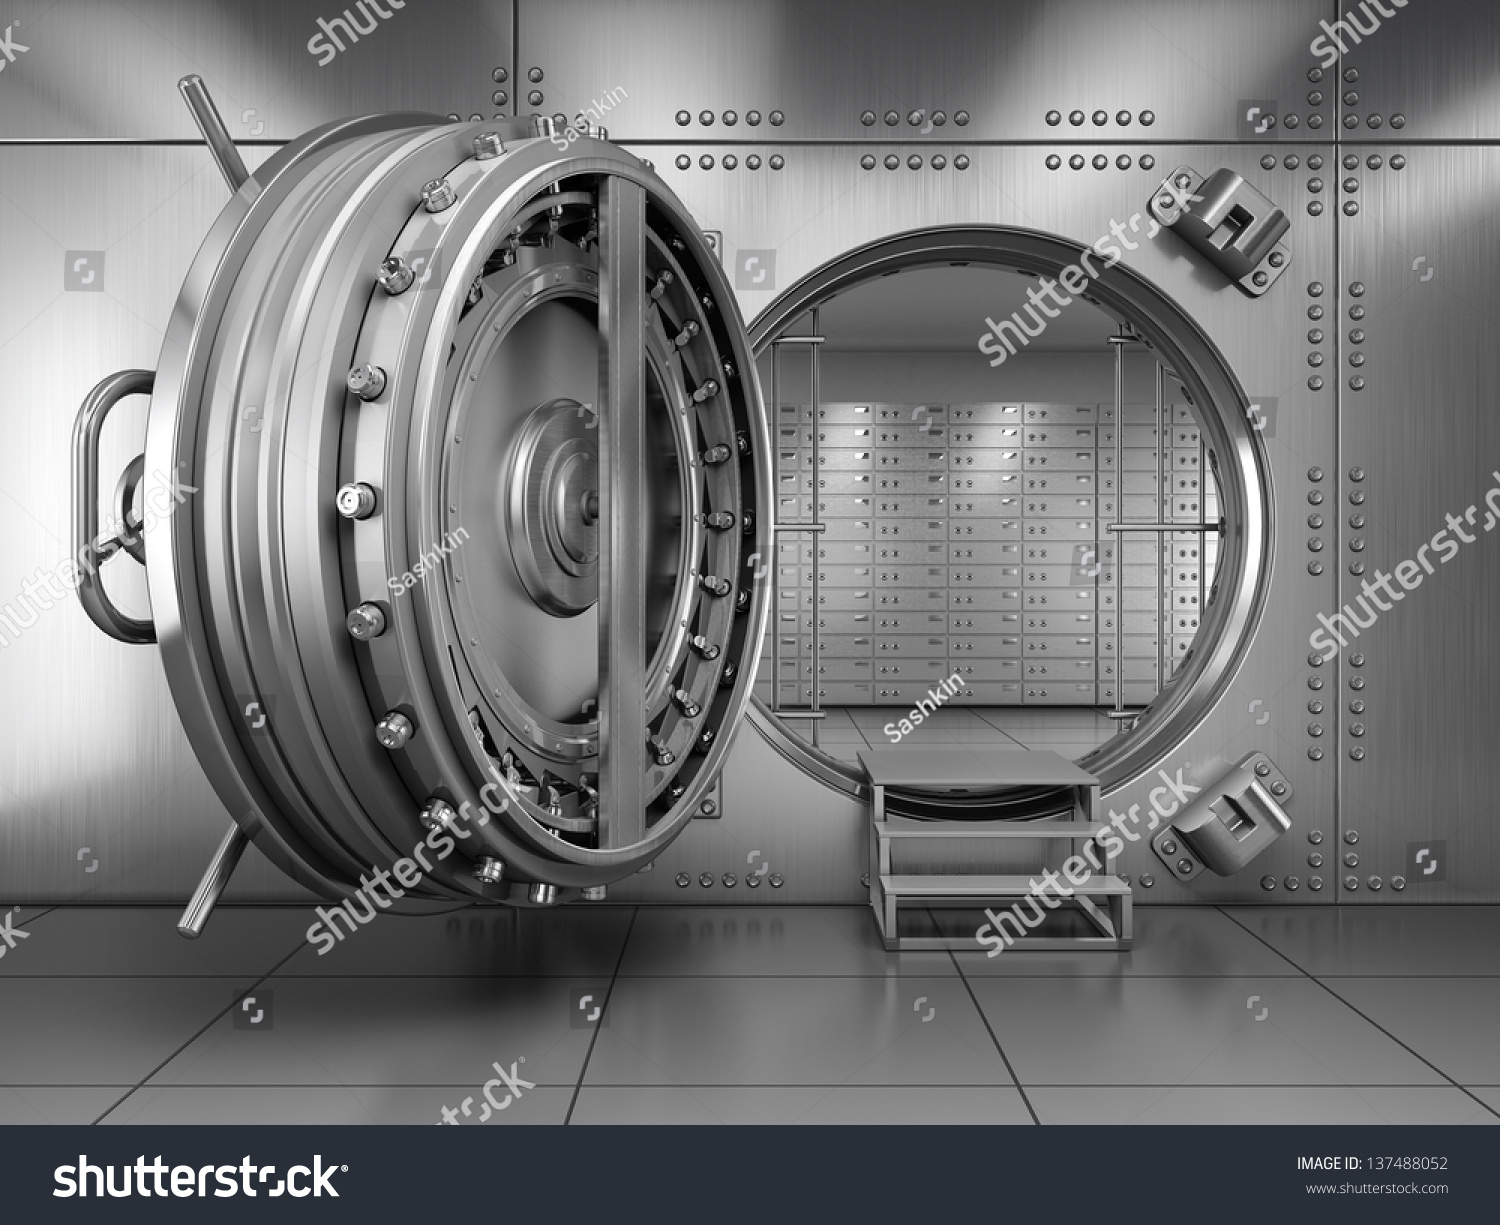 free clipart bank vault - photo #46